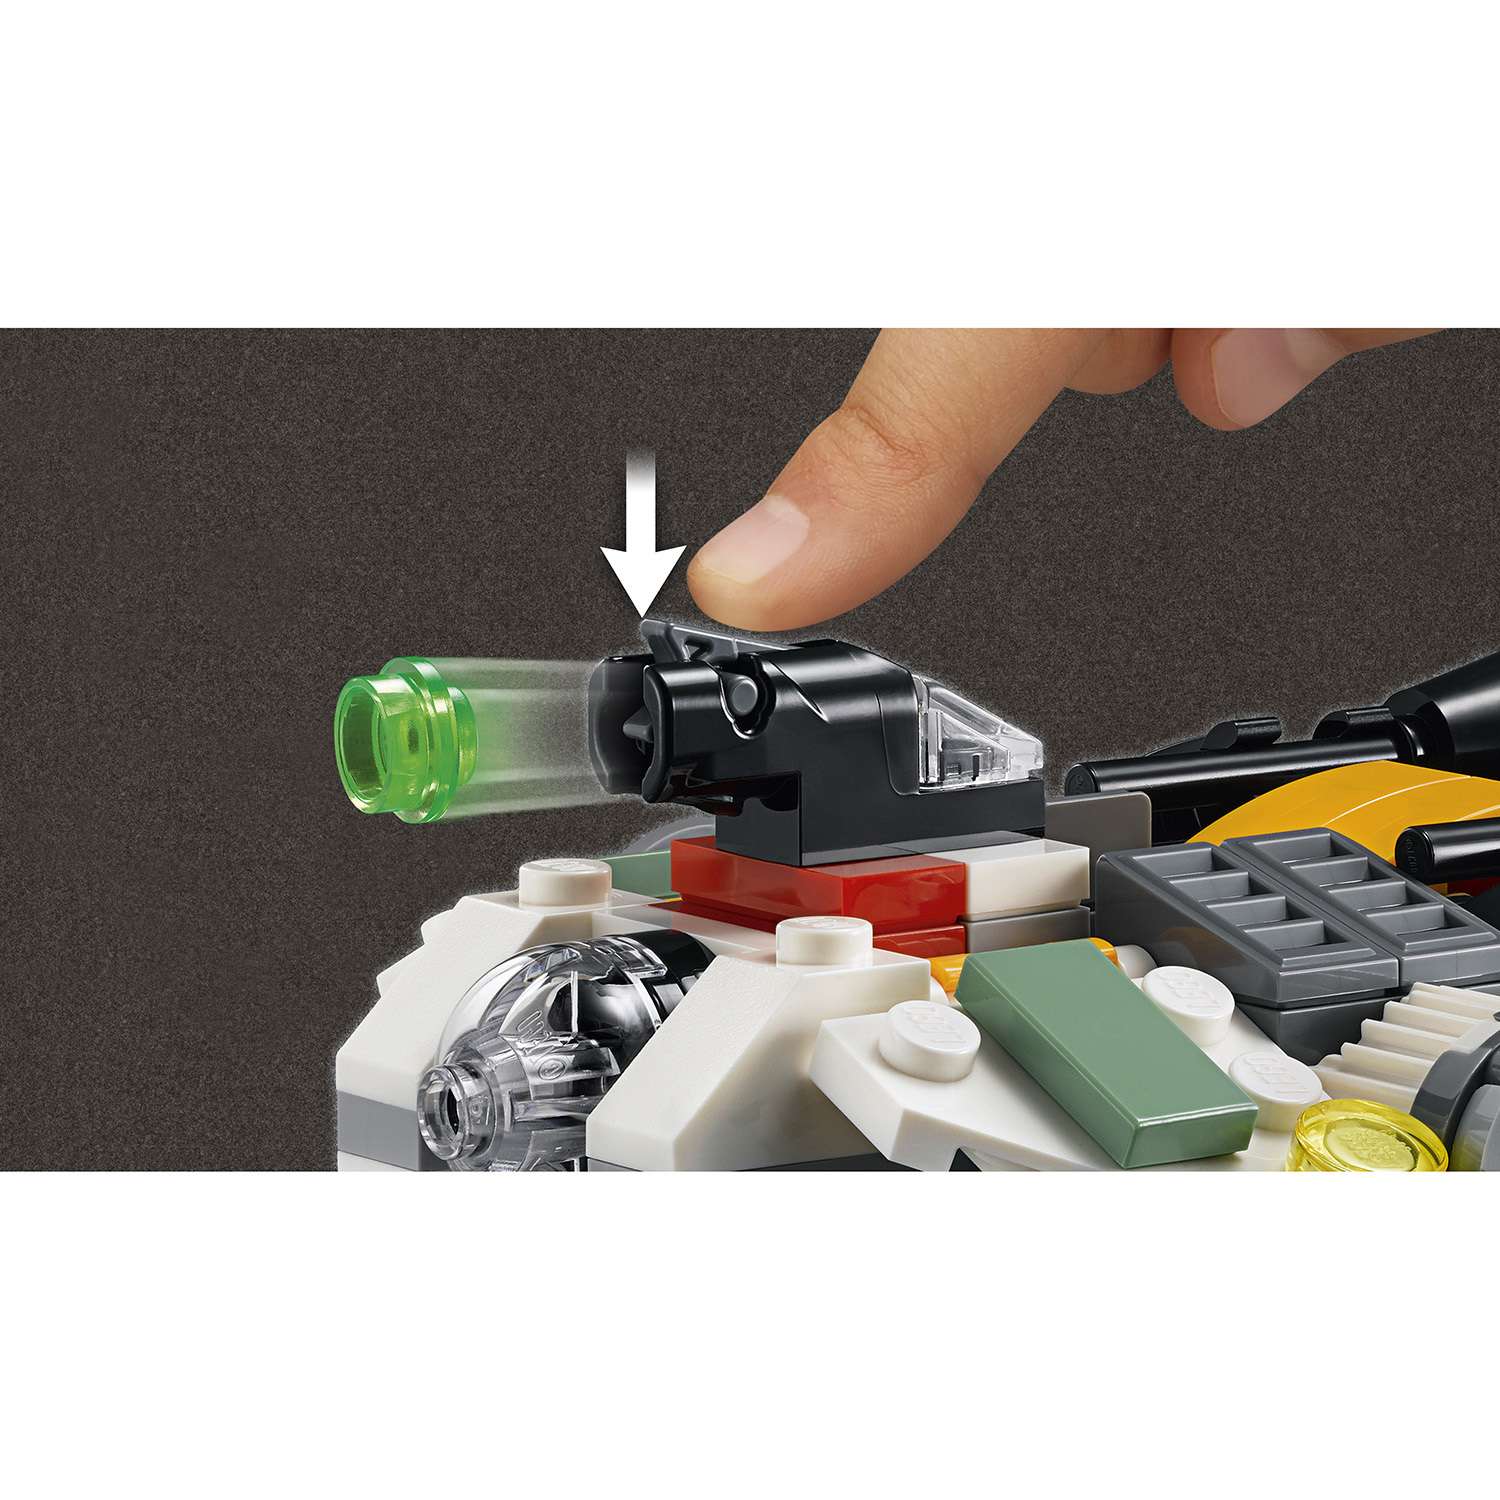 Конструктор LEGO Star Wars TM Призрак™ (75127) - фото 6